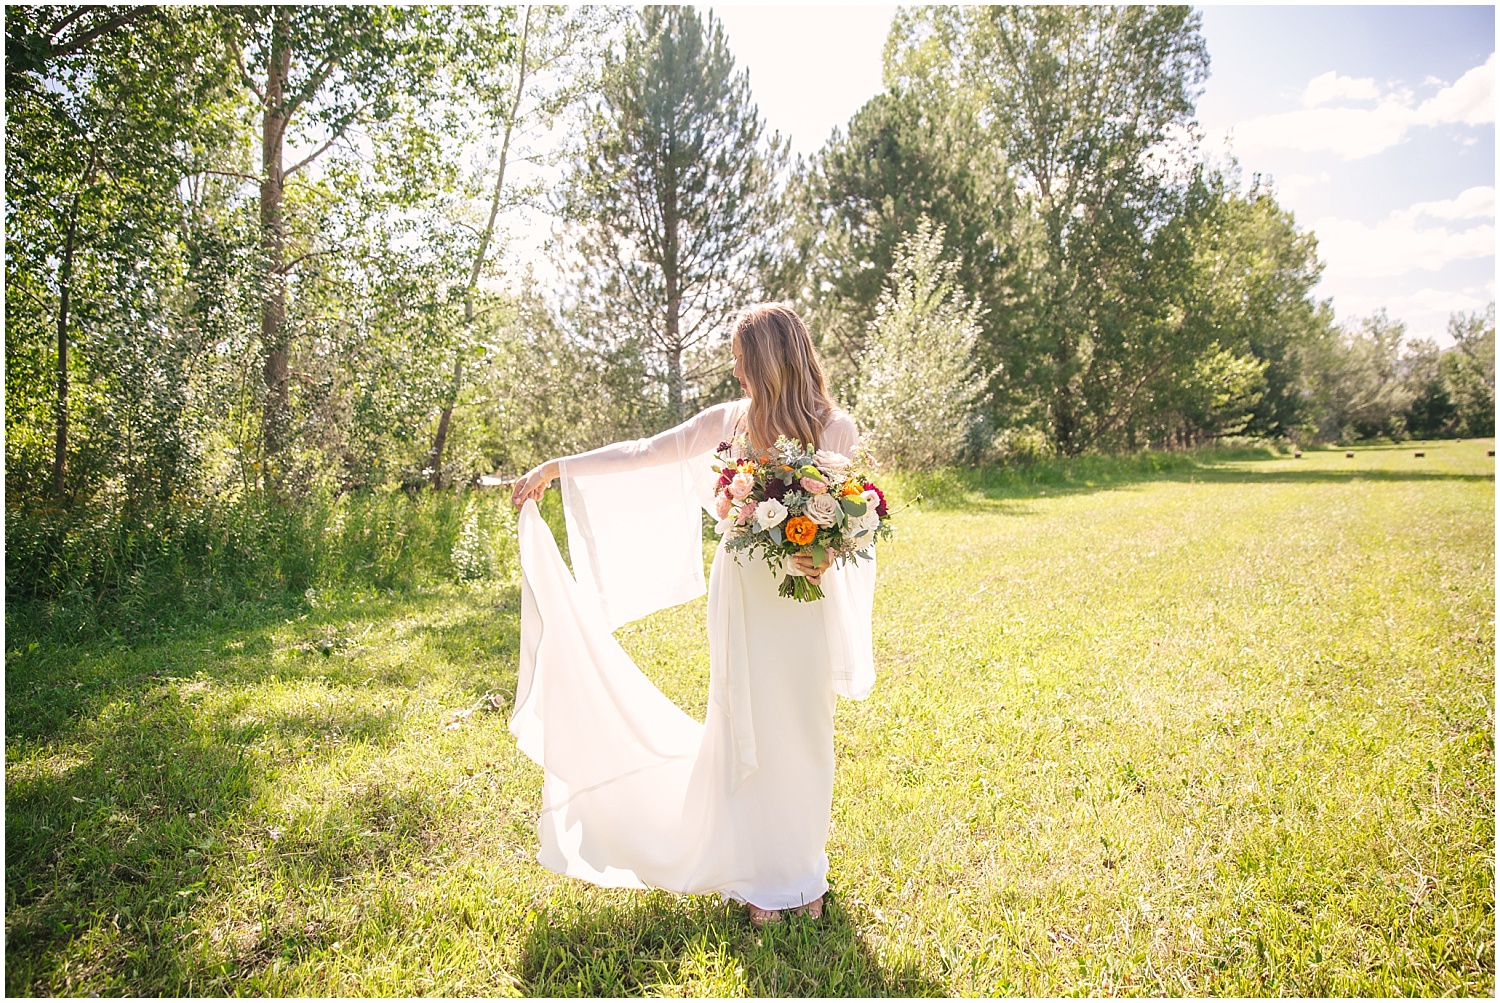 Bridal portrait with long-sleeved wedding dress by Shareen Bridal at Lone Hawk Farm in Longmont Colorado